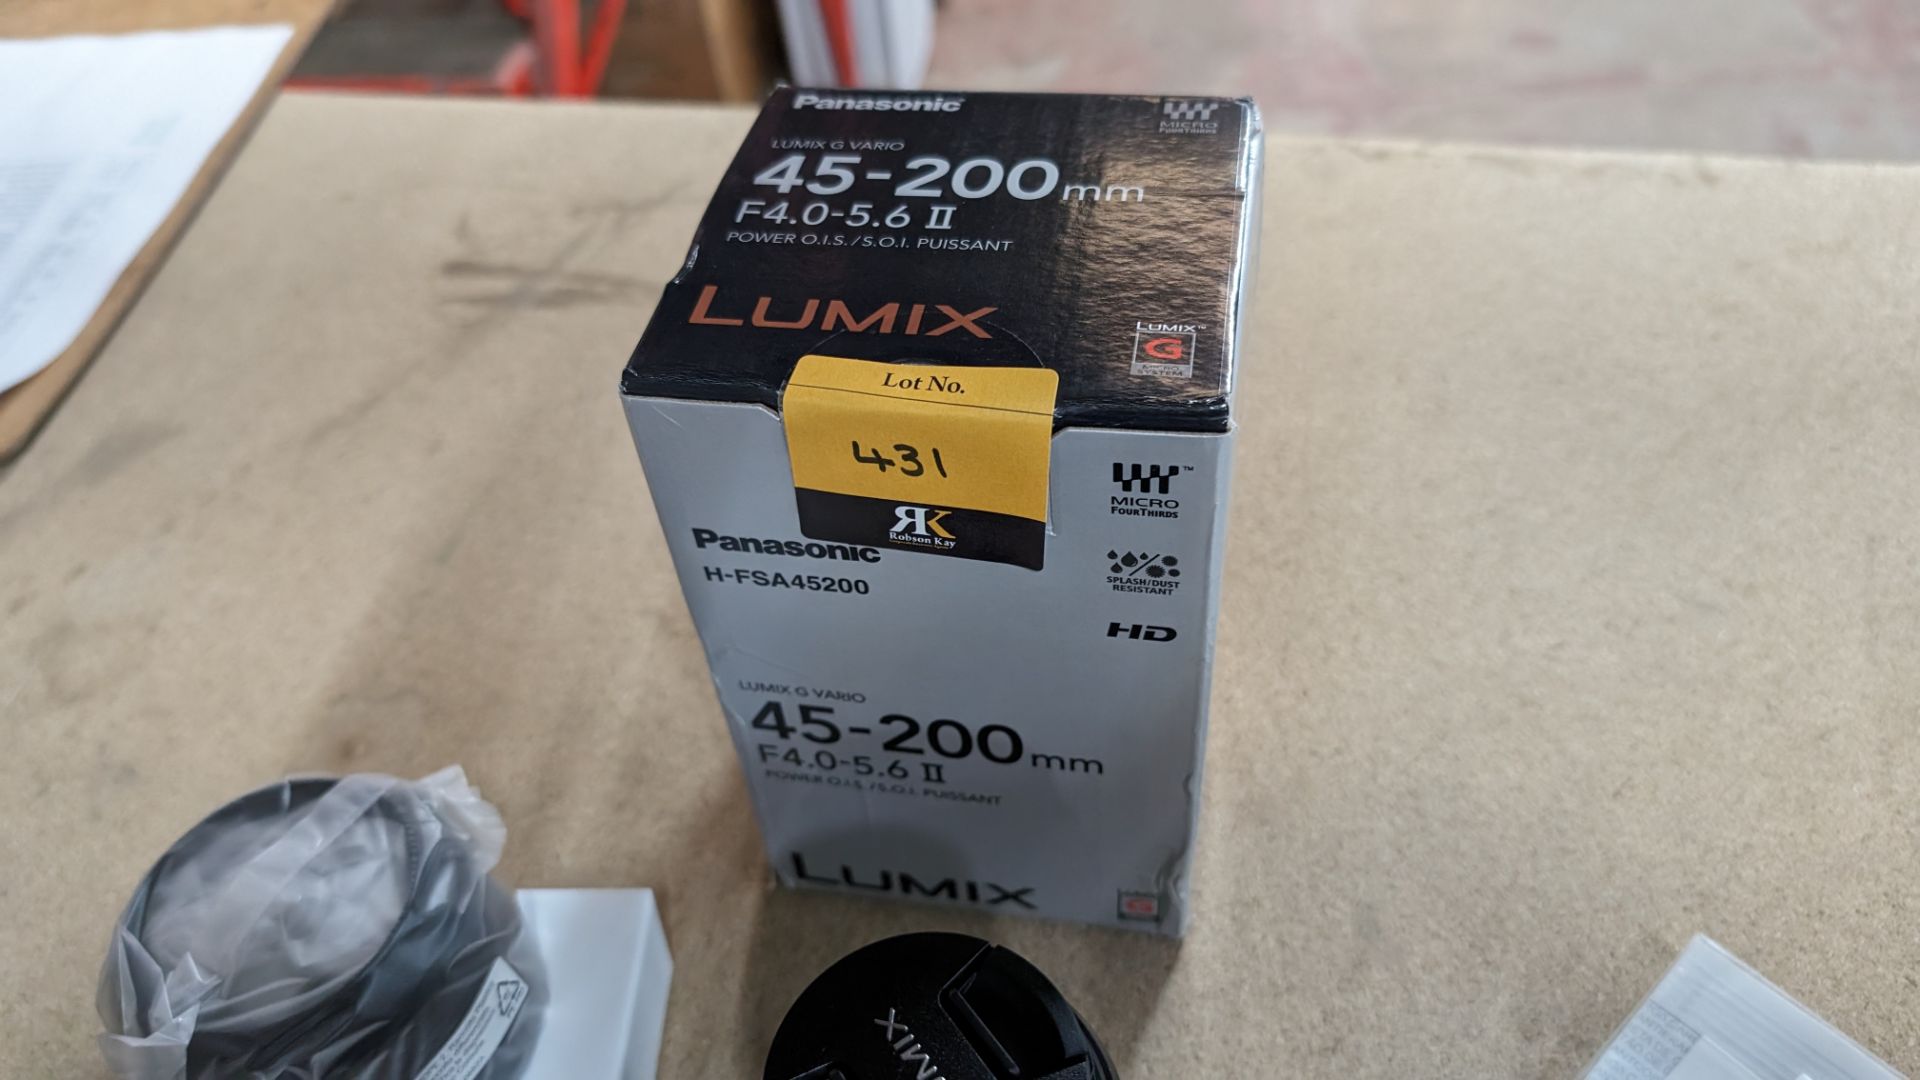 Panasonic Lumix G Vario 45-200mm lens, model H-FSA45200, f4.0-5.6 II - Image 8 of 10